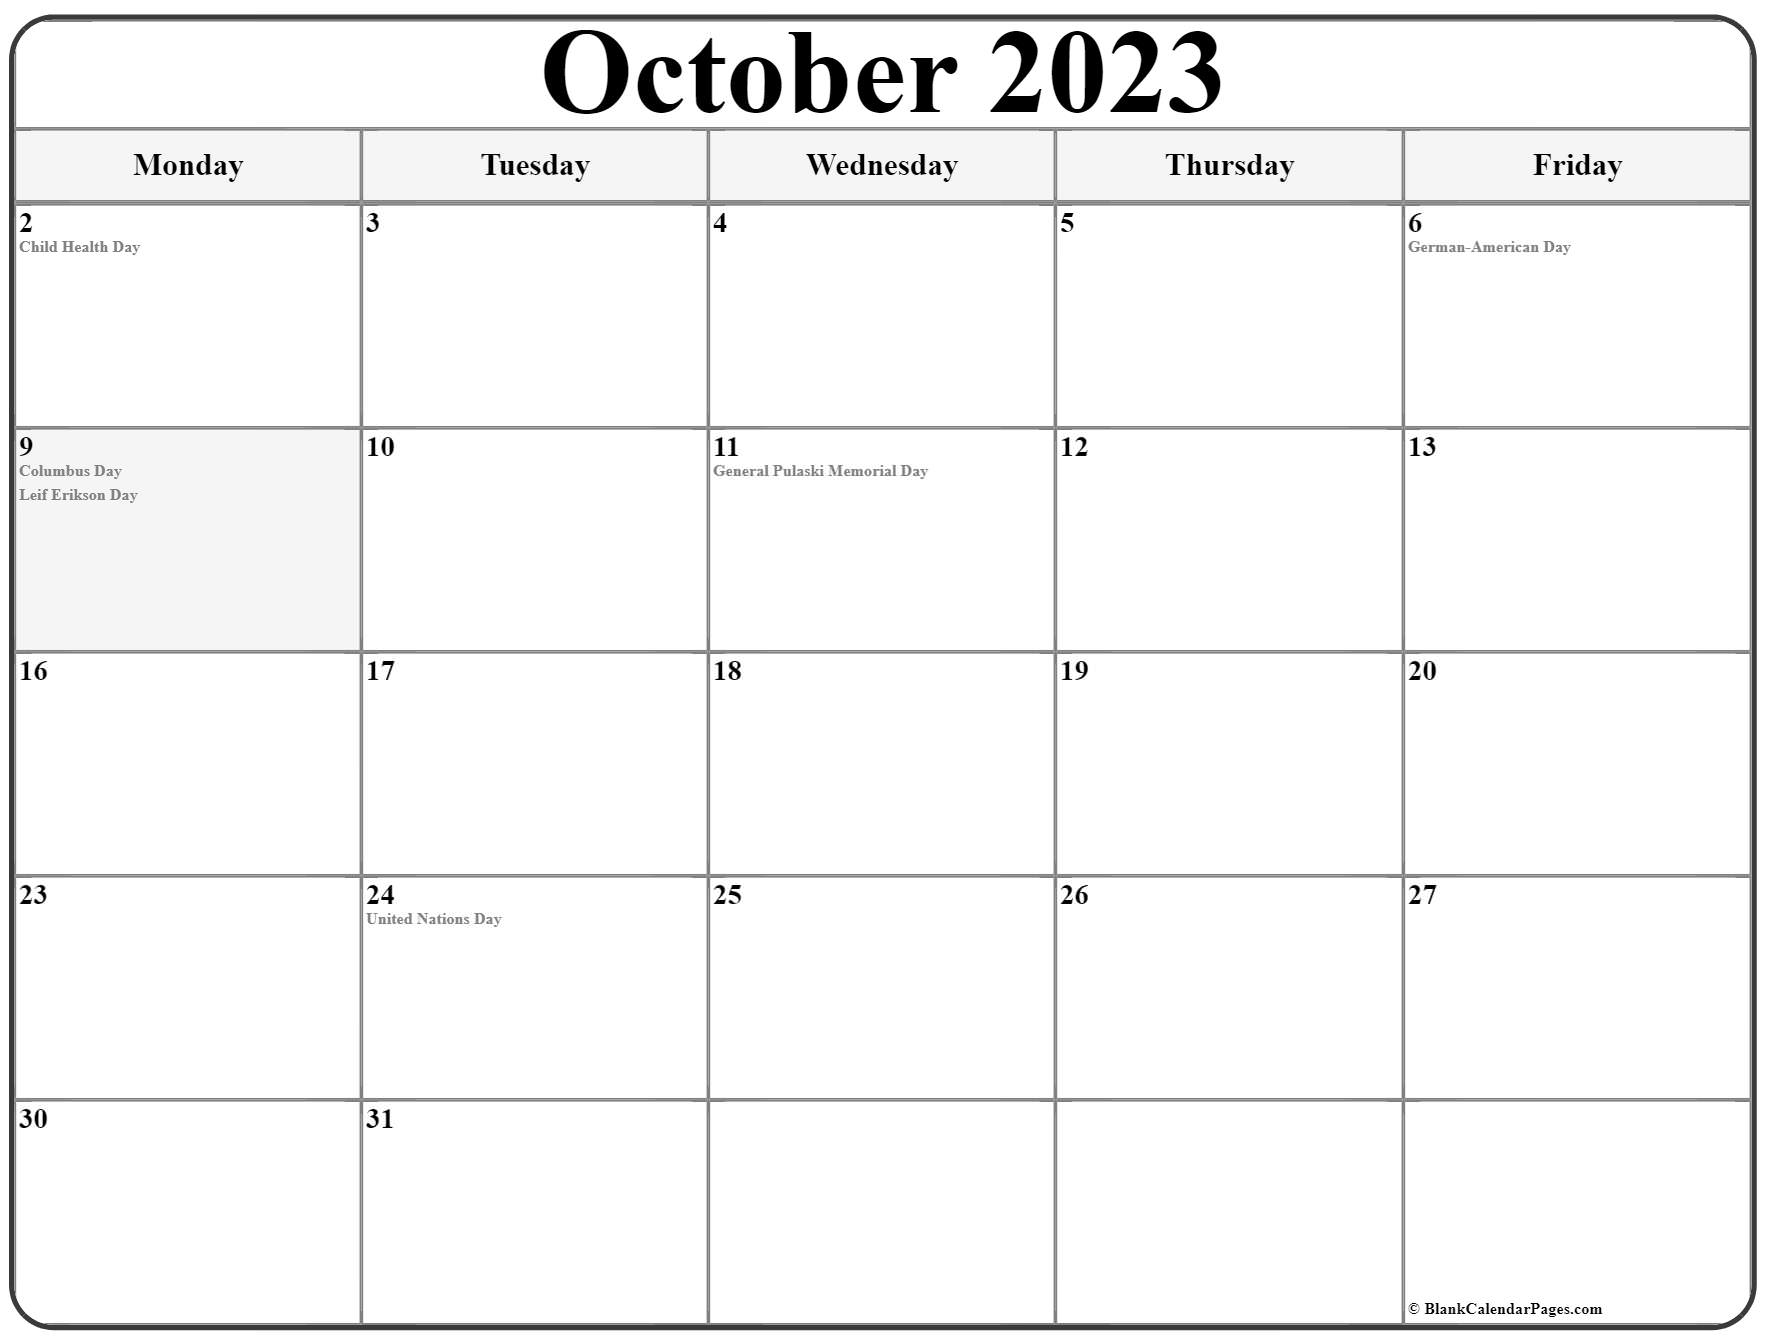 october-2023-with-holidays-calendar-october-2023-calendar-free